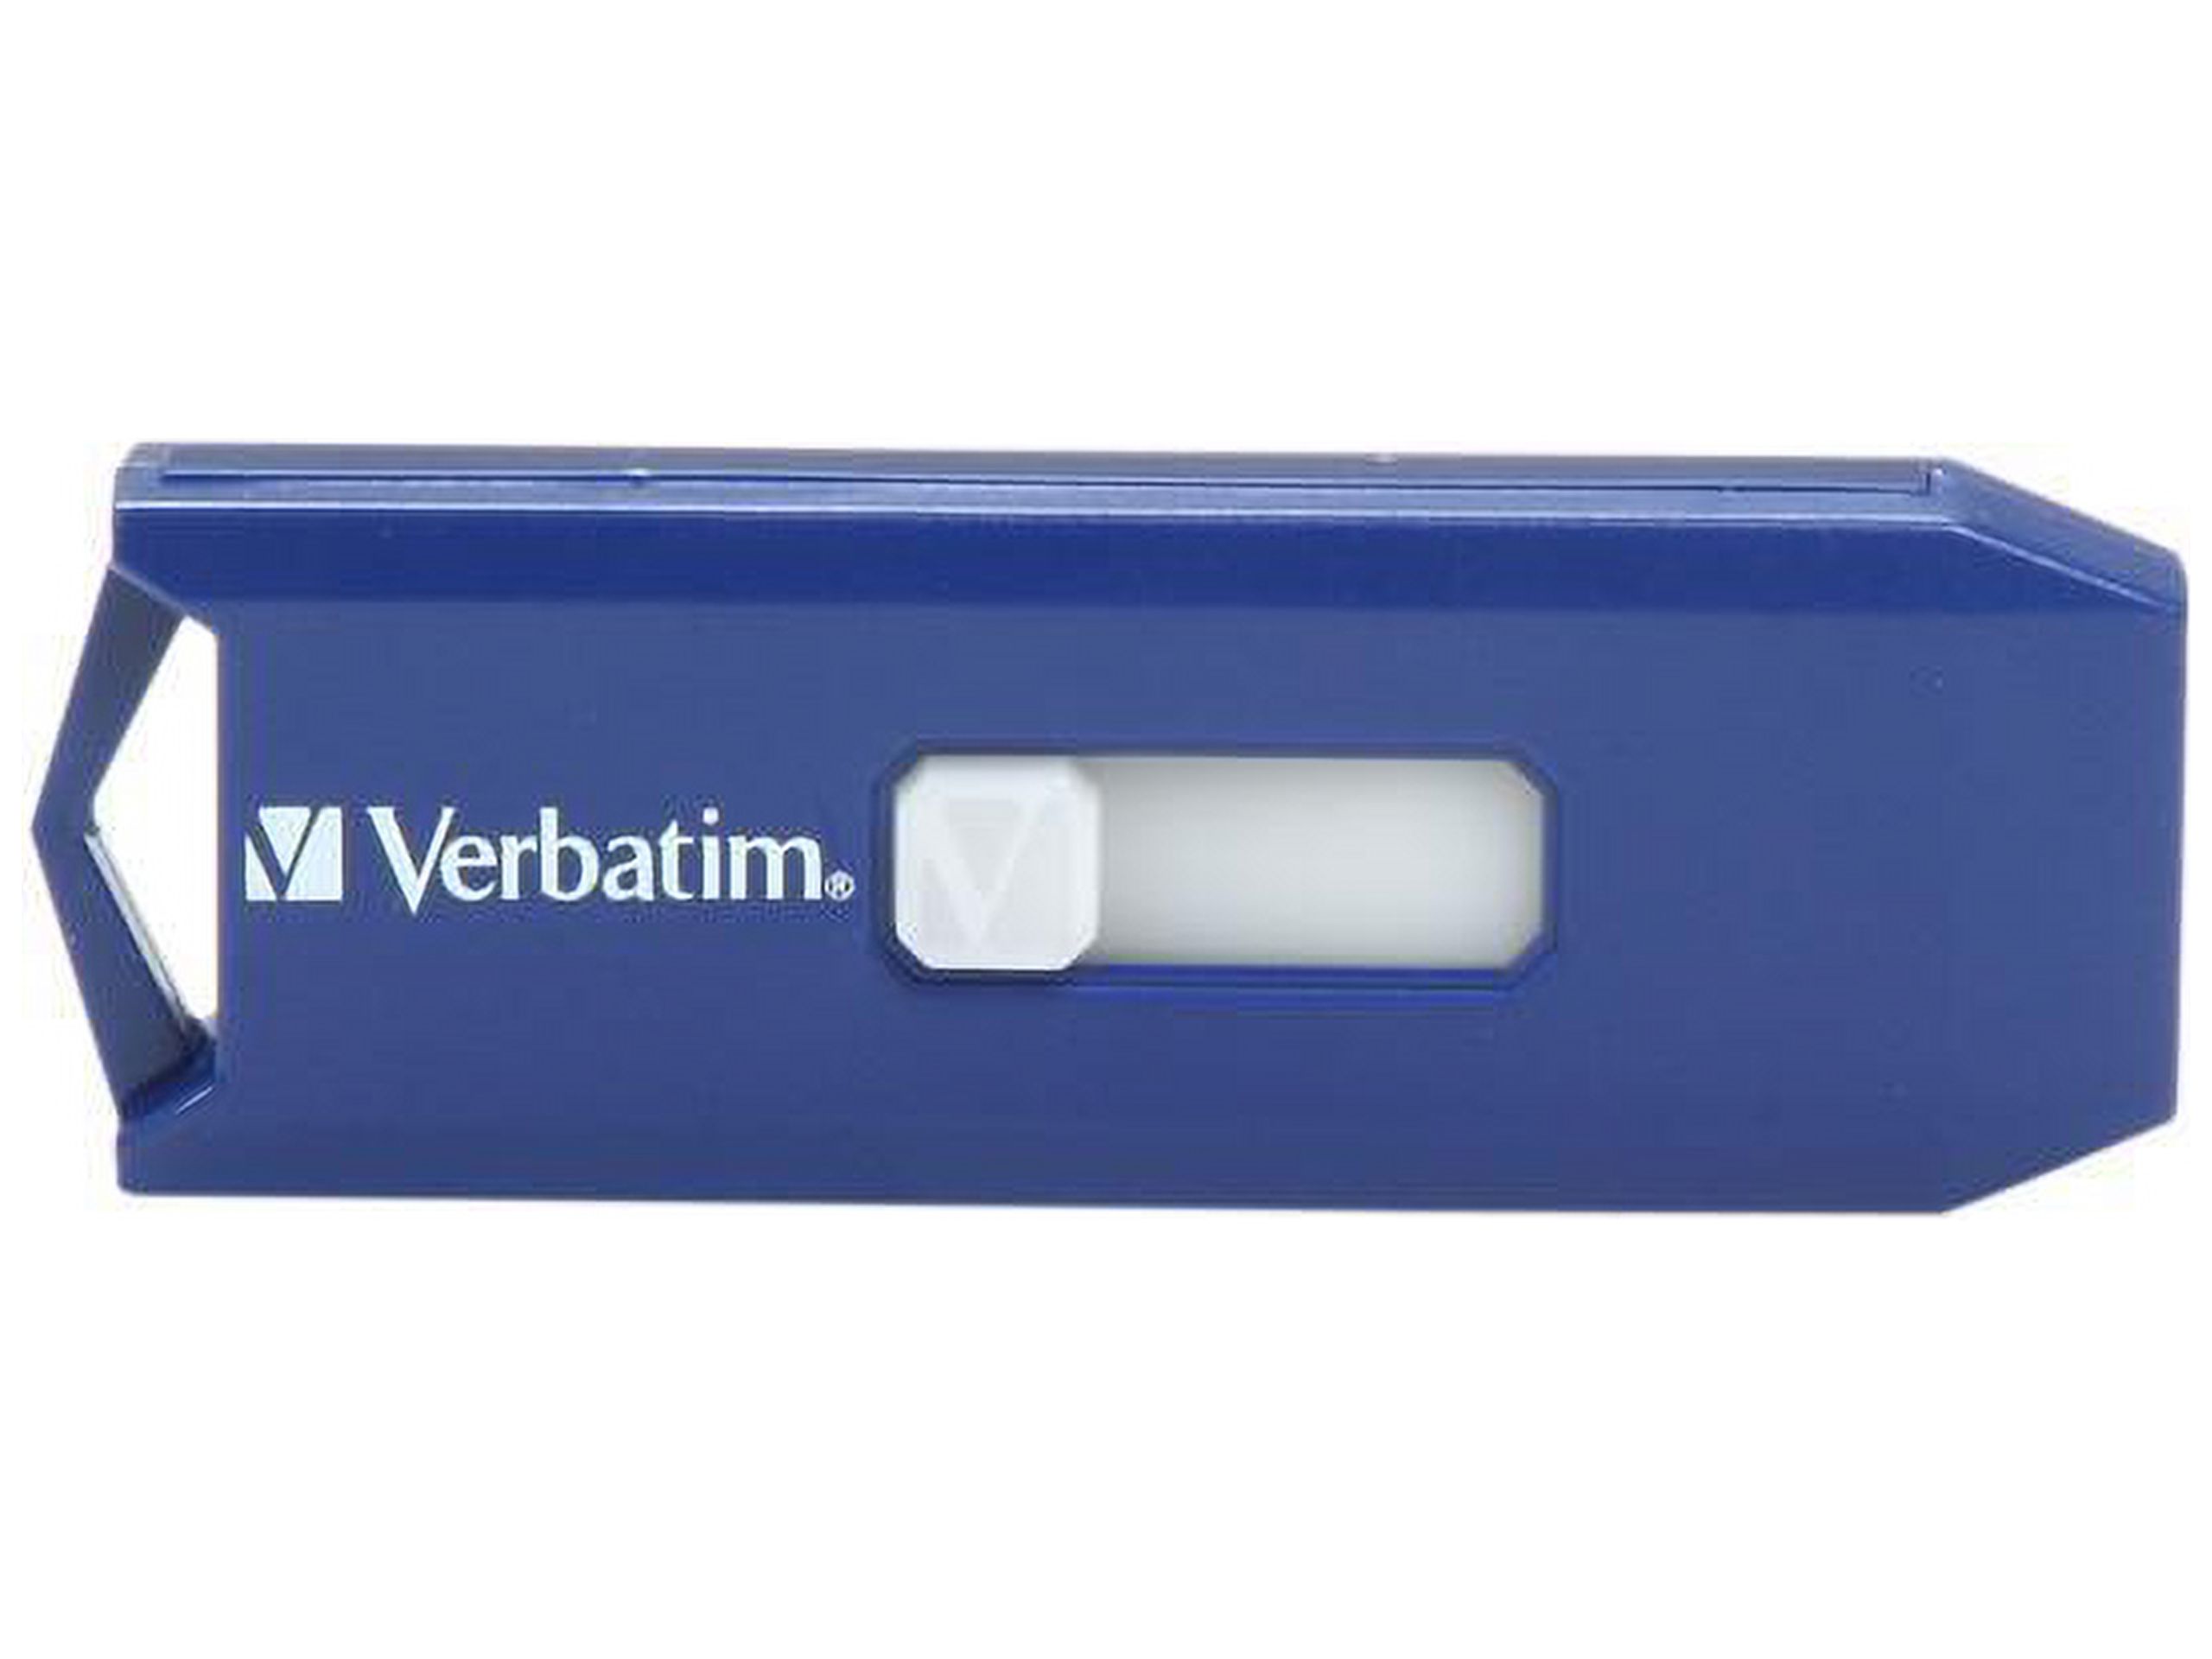 Verbatim Smart 16GB USB 2.0 Flash Drive Model 97275 - image 2 of 6